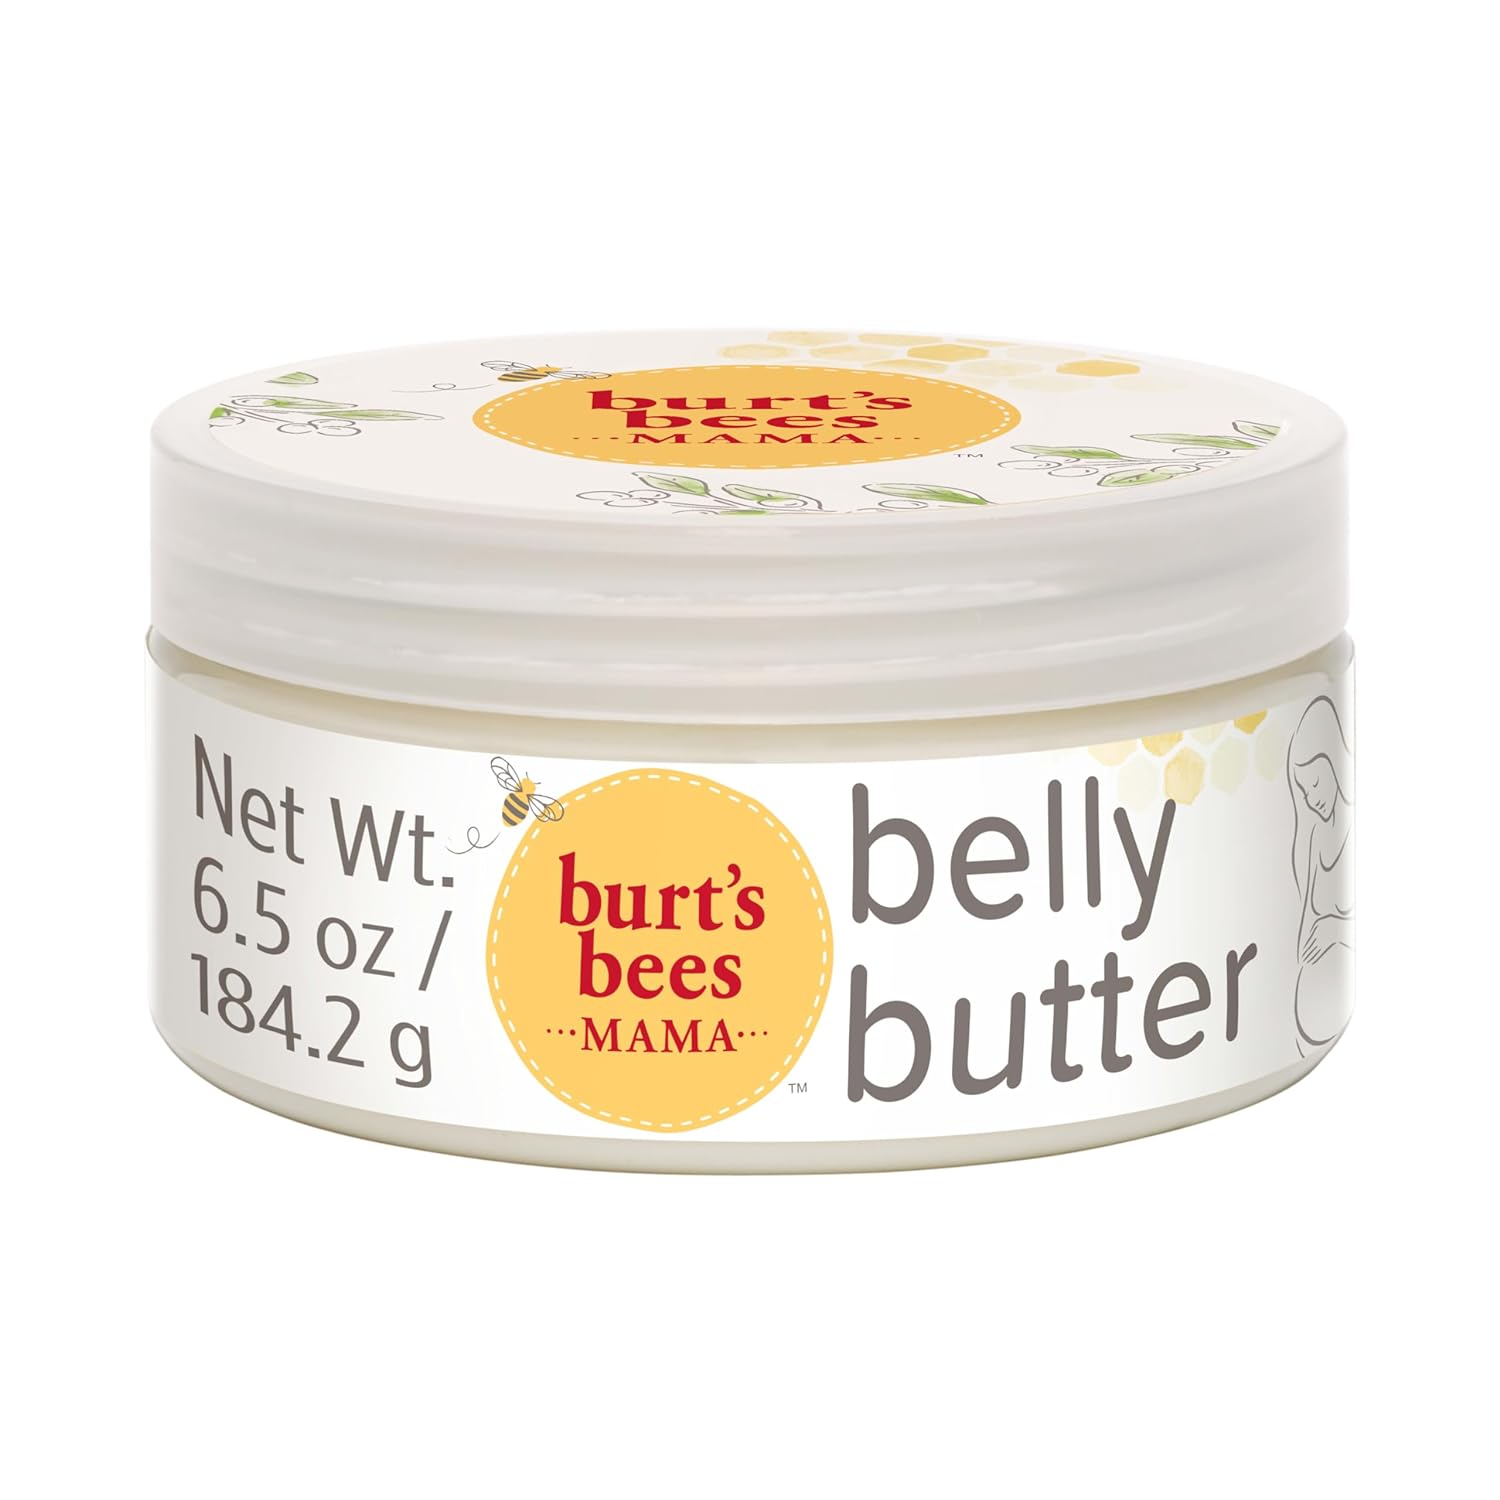 Amazon.com : Burt's Bees Mama Belly Butter, Stretch Mark Cream $6.50